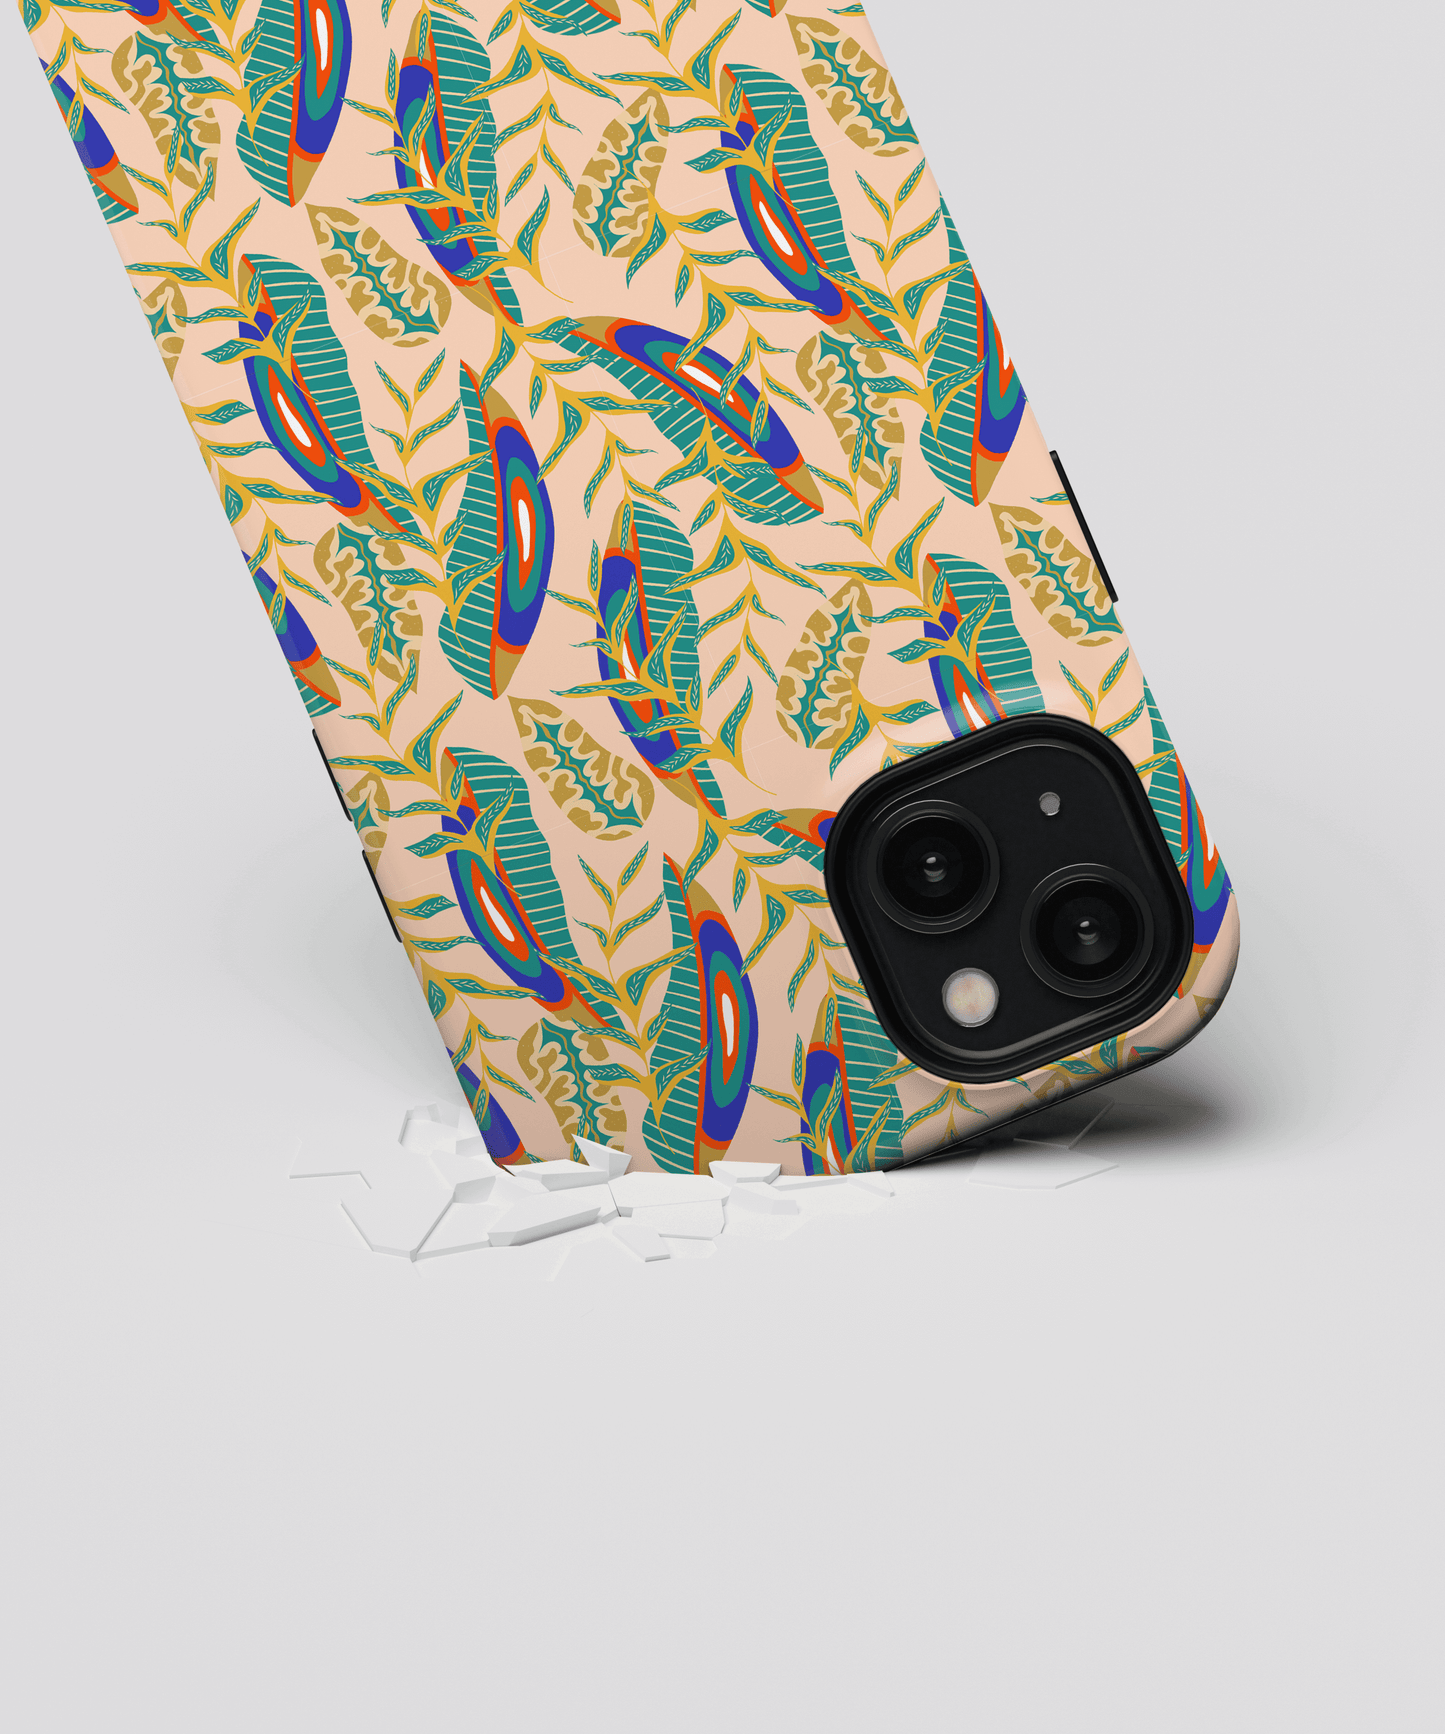 Breezy - iPhone SE (2016) phone case